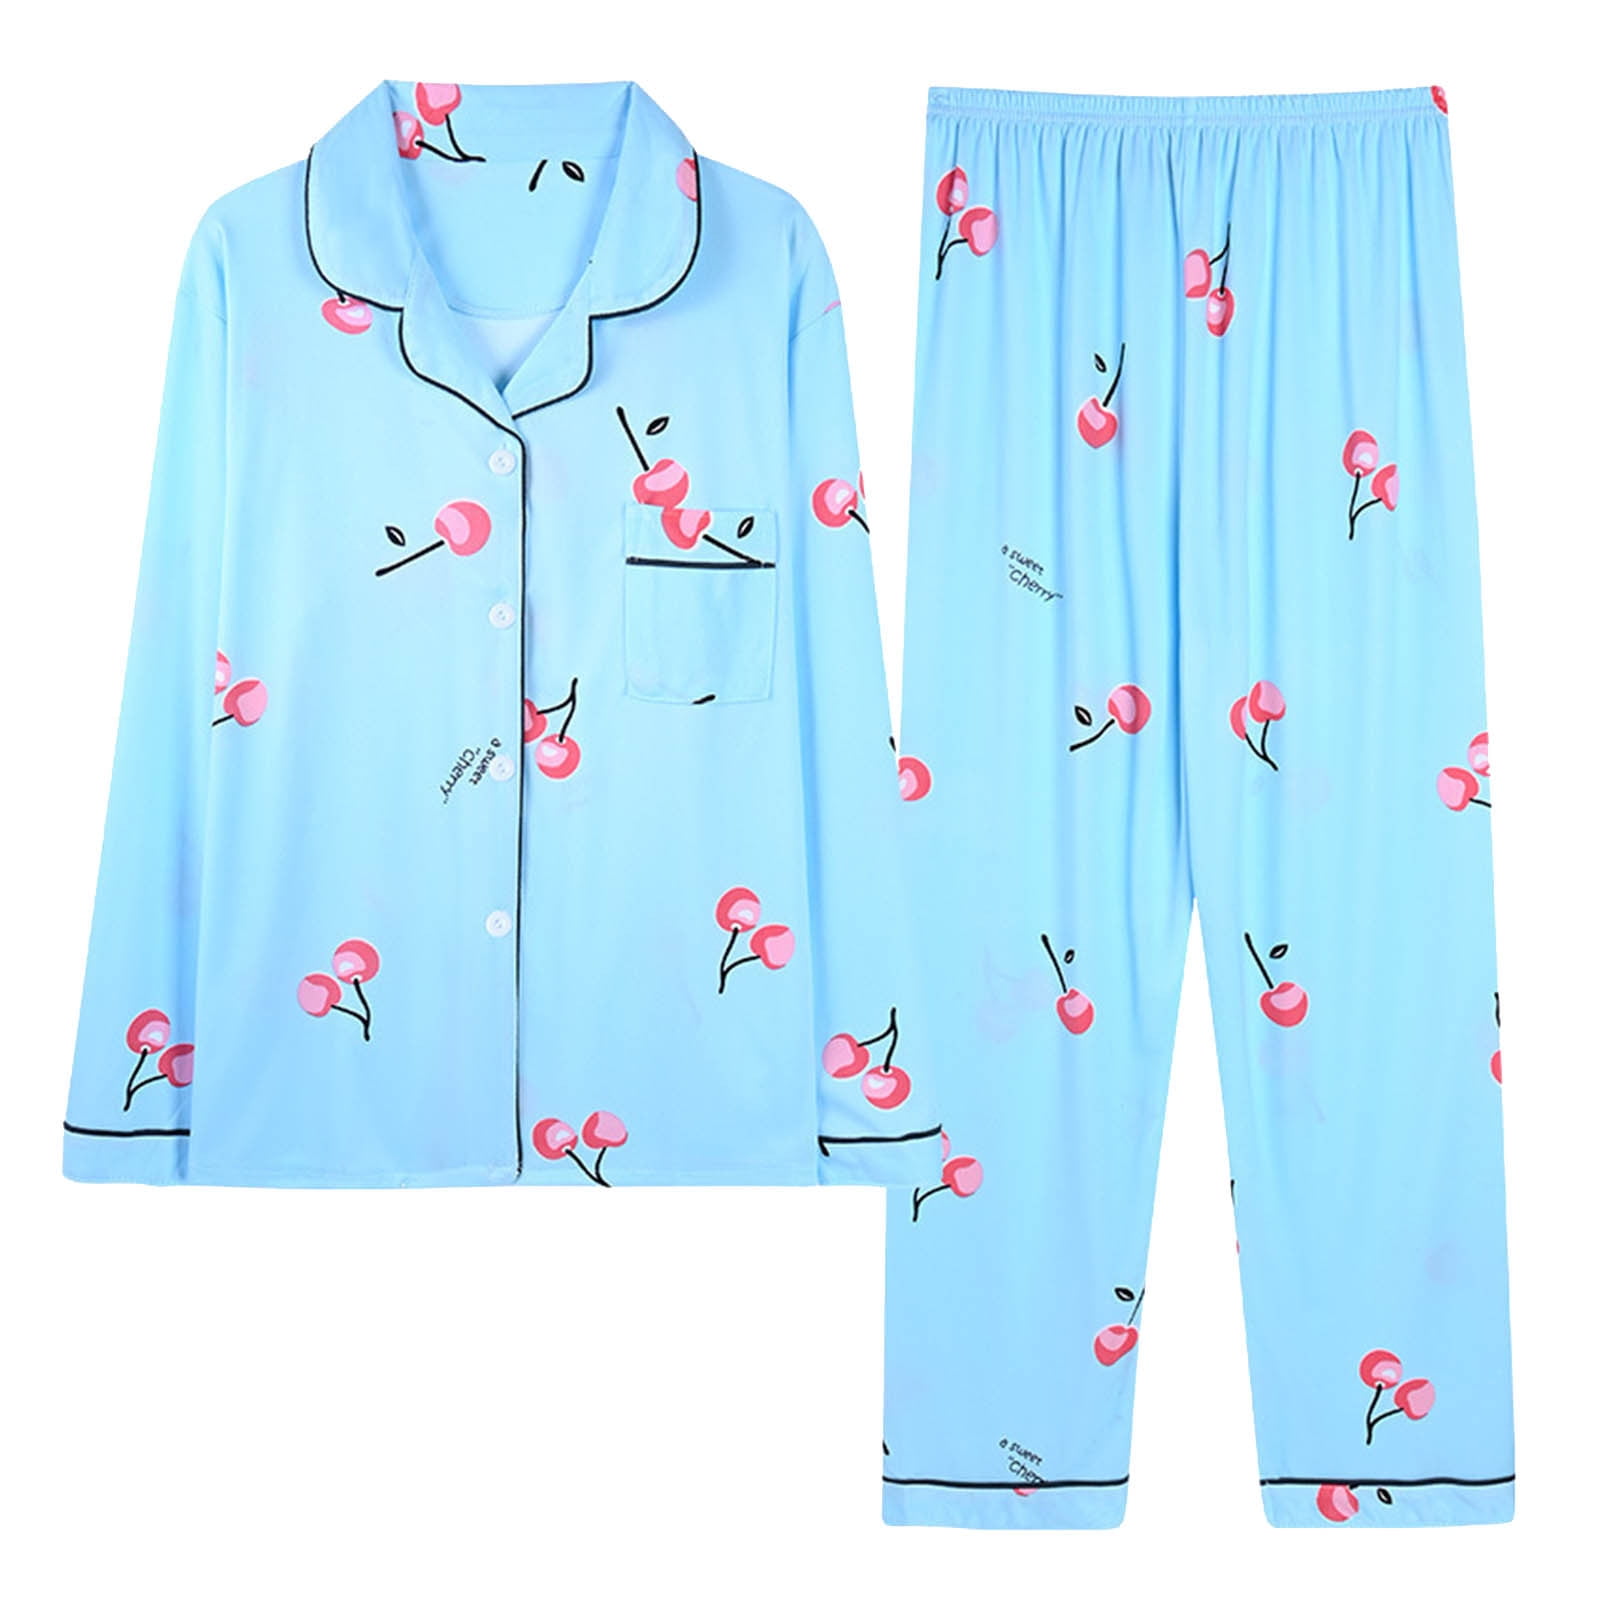 Wowens Plus Pajama Sets All Over Print Sleepware Lounge Royal Blue 2XL